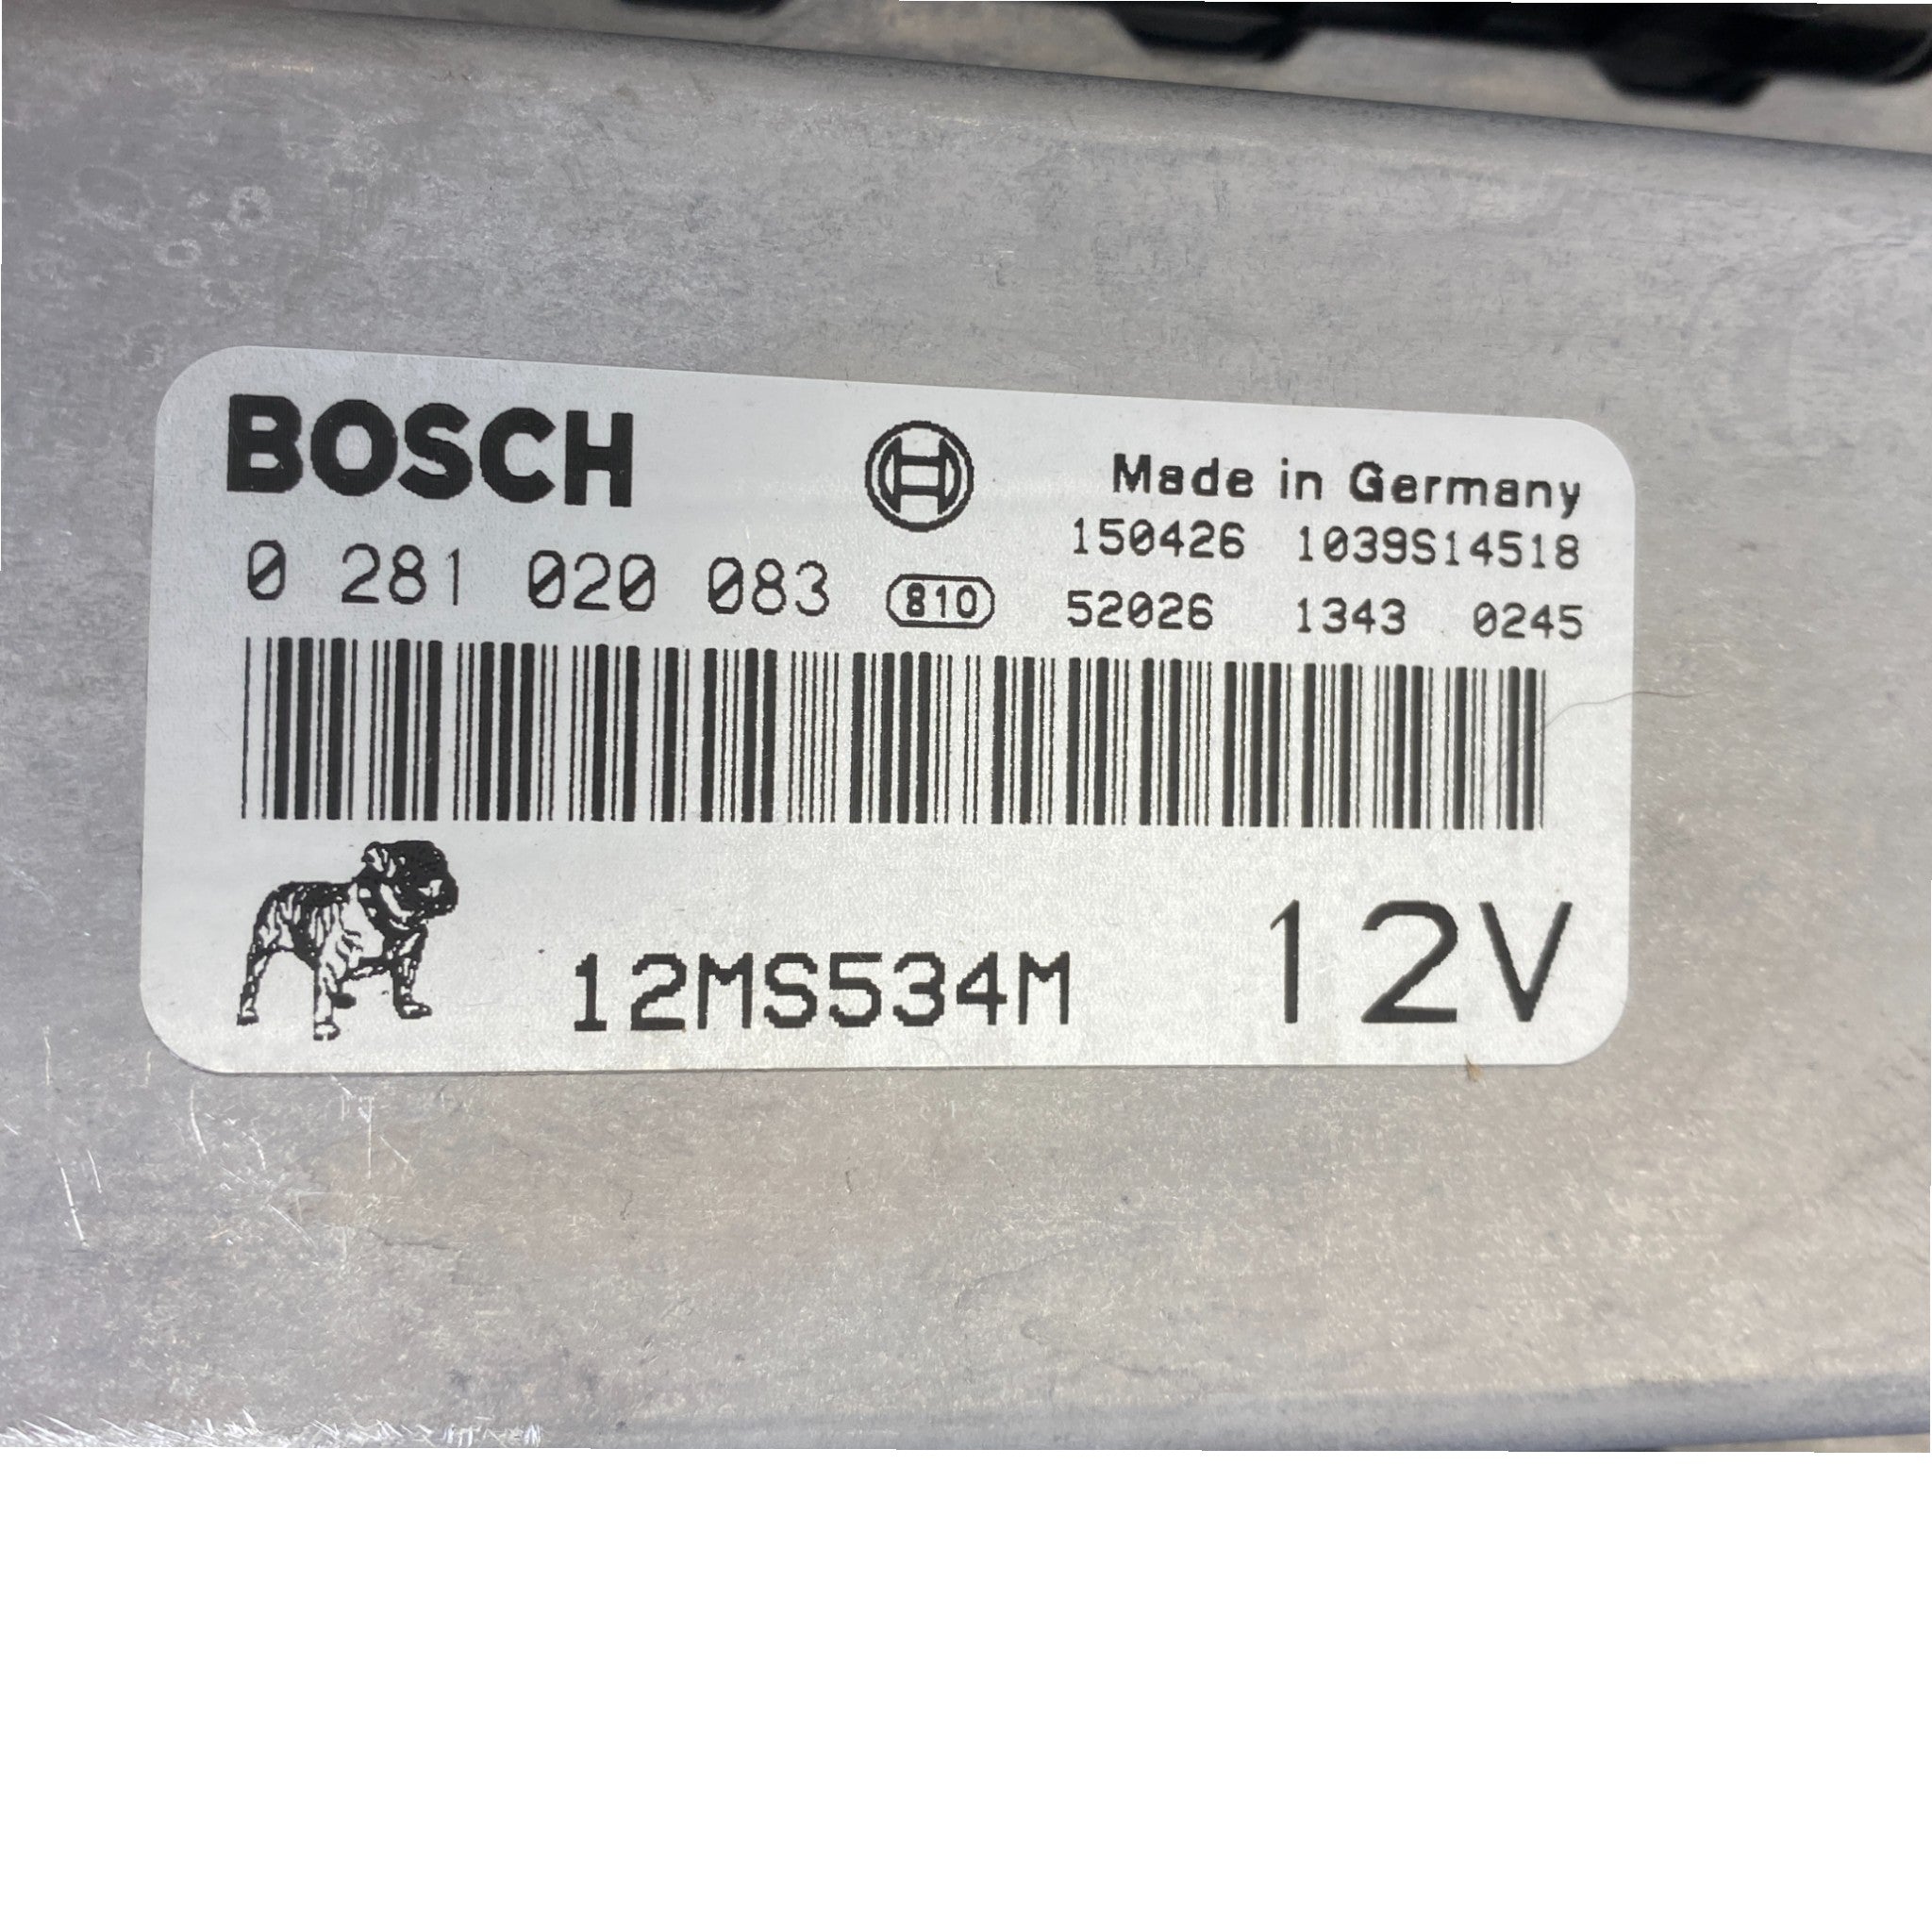 0281020083 Genuine Bosch® Ecm Engine Control Module